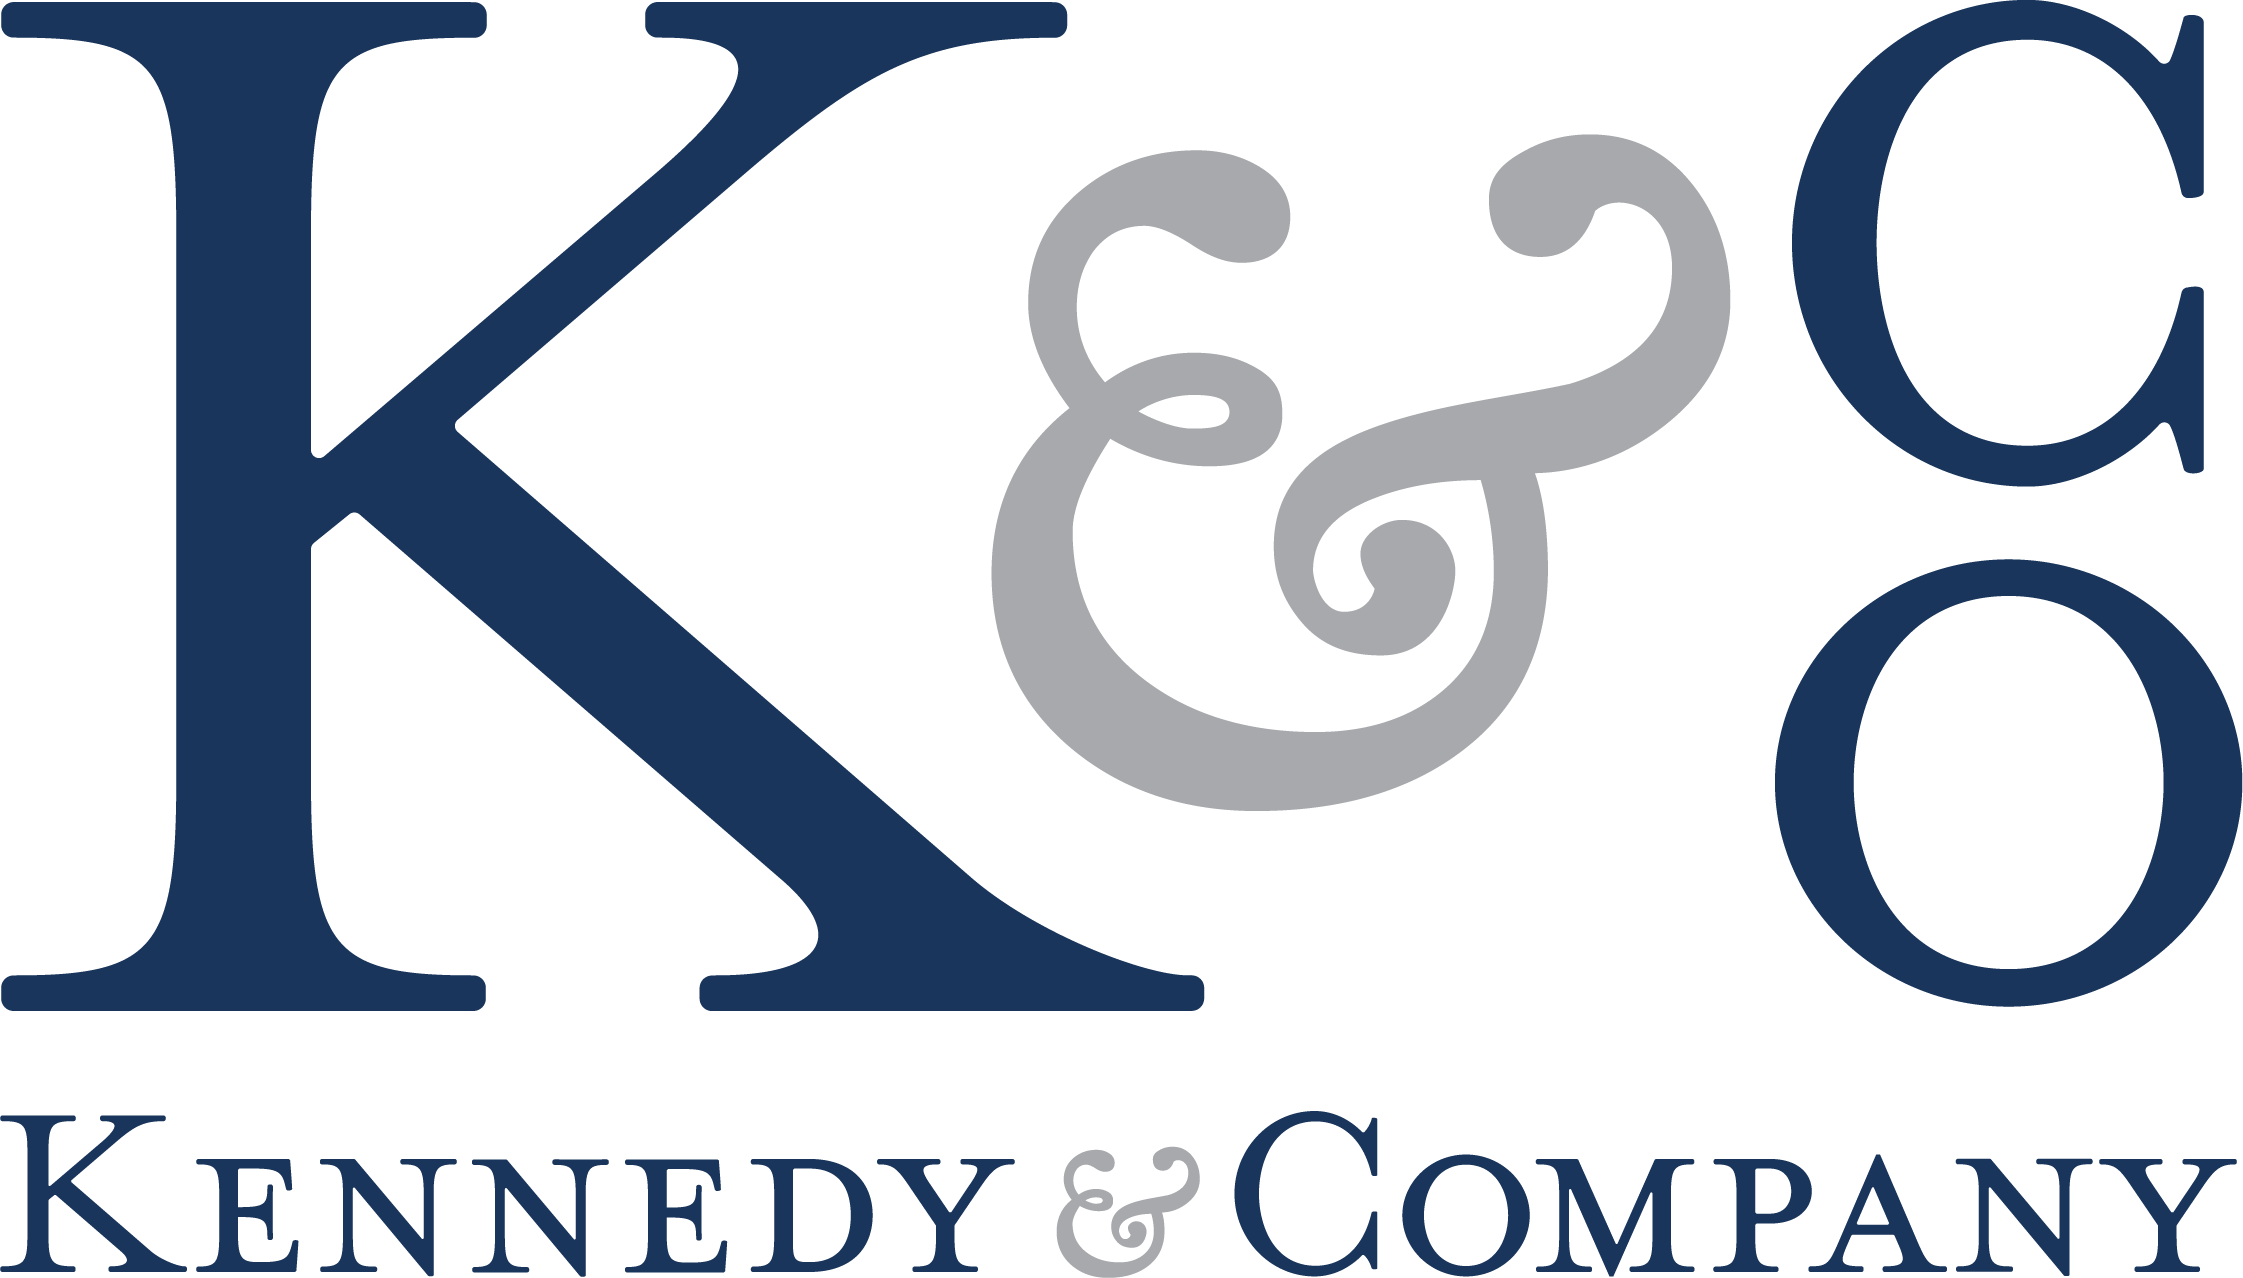 Kennedy and Company